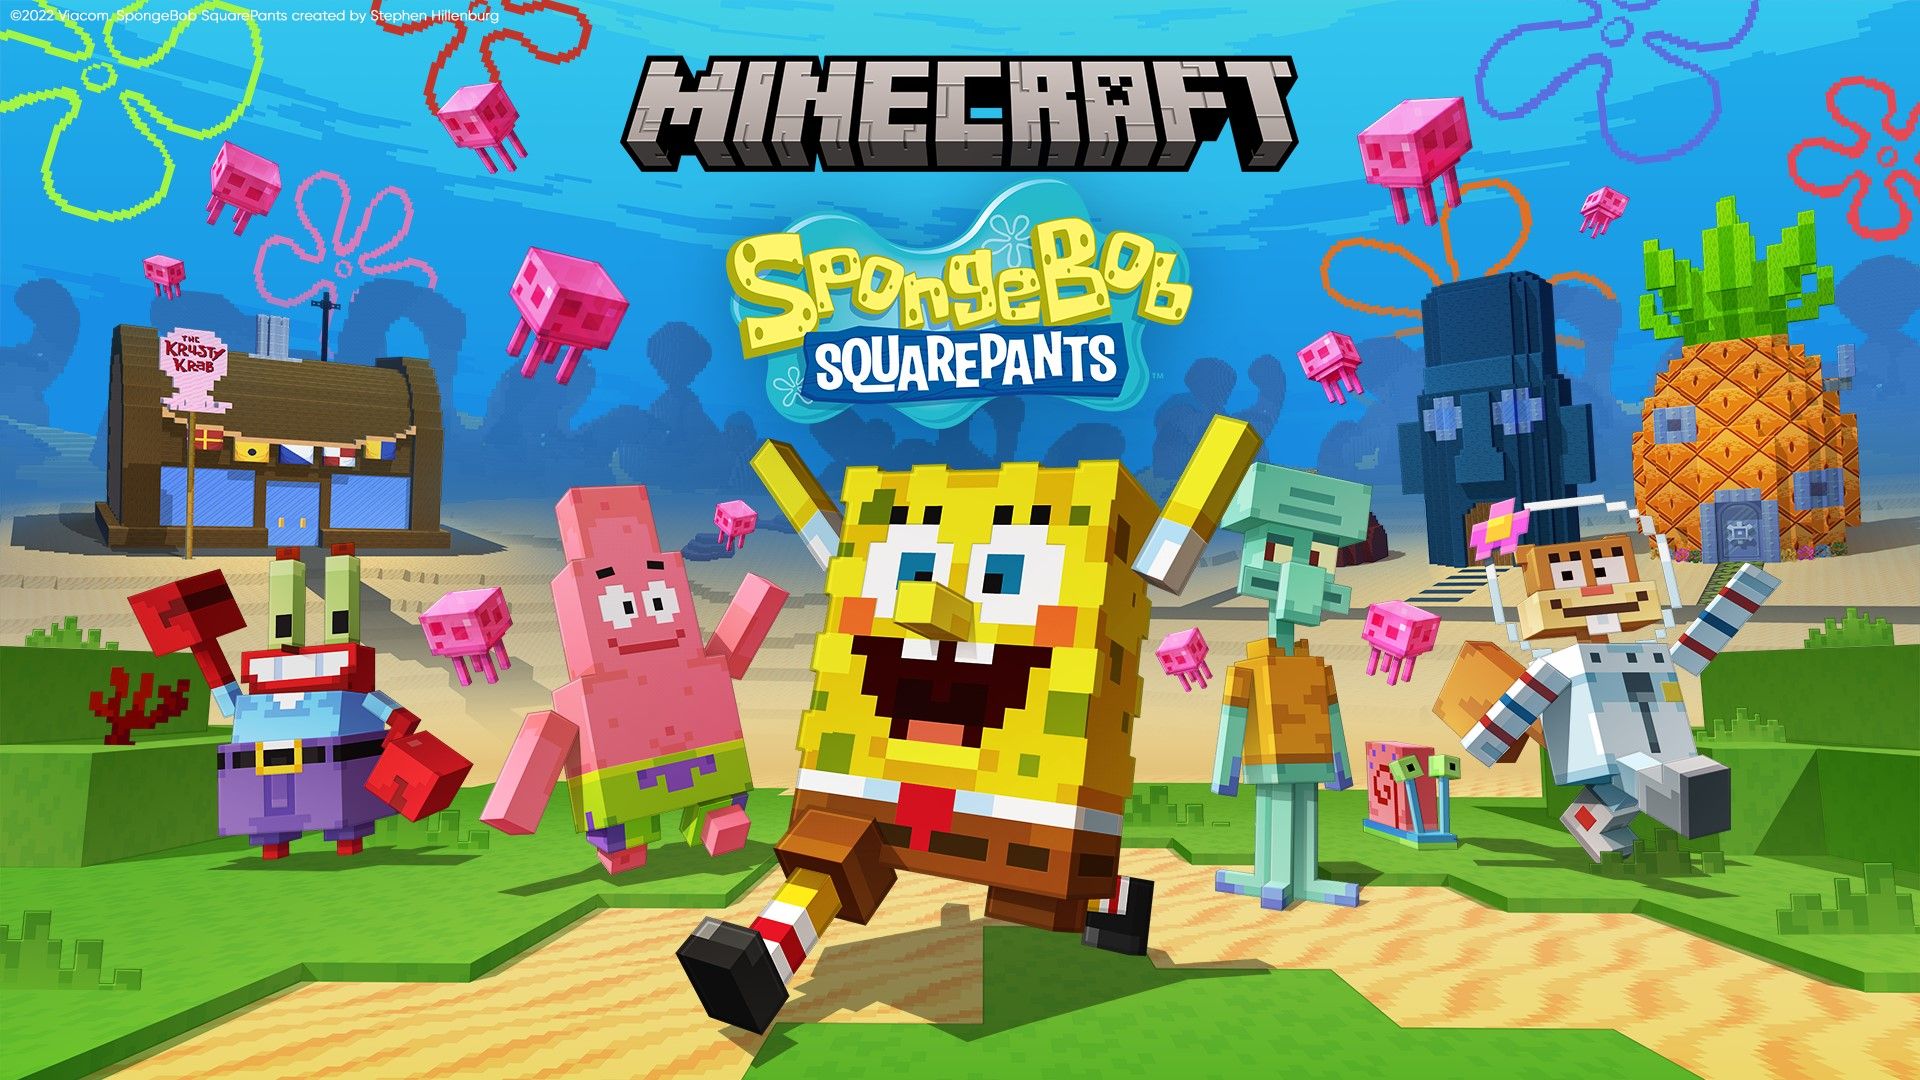 Minecraft SpongeBob SquarePants DLC Now Available in Minecraft Marketplace